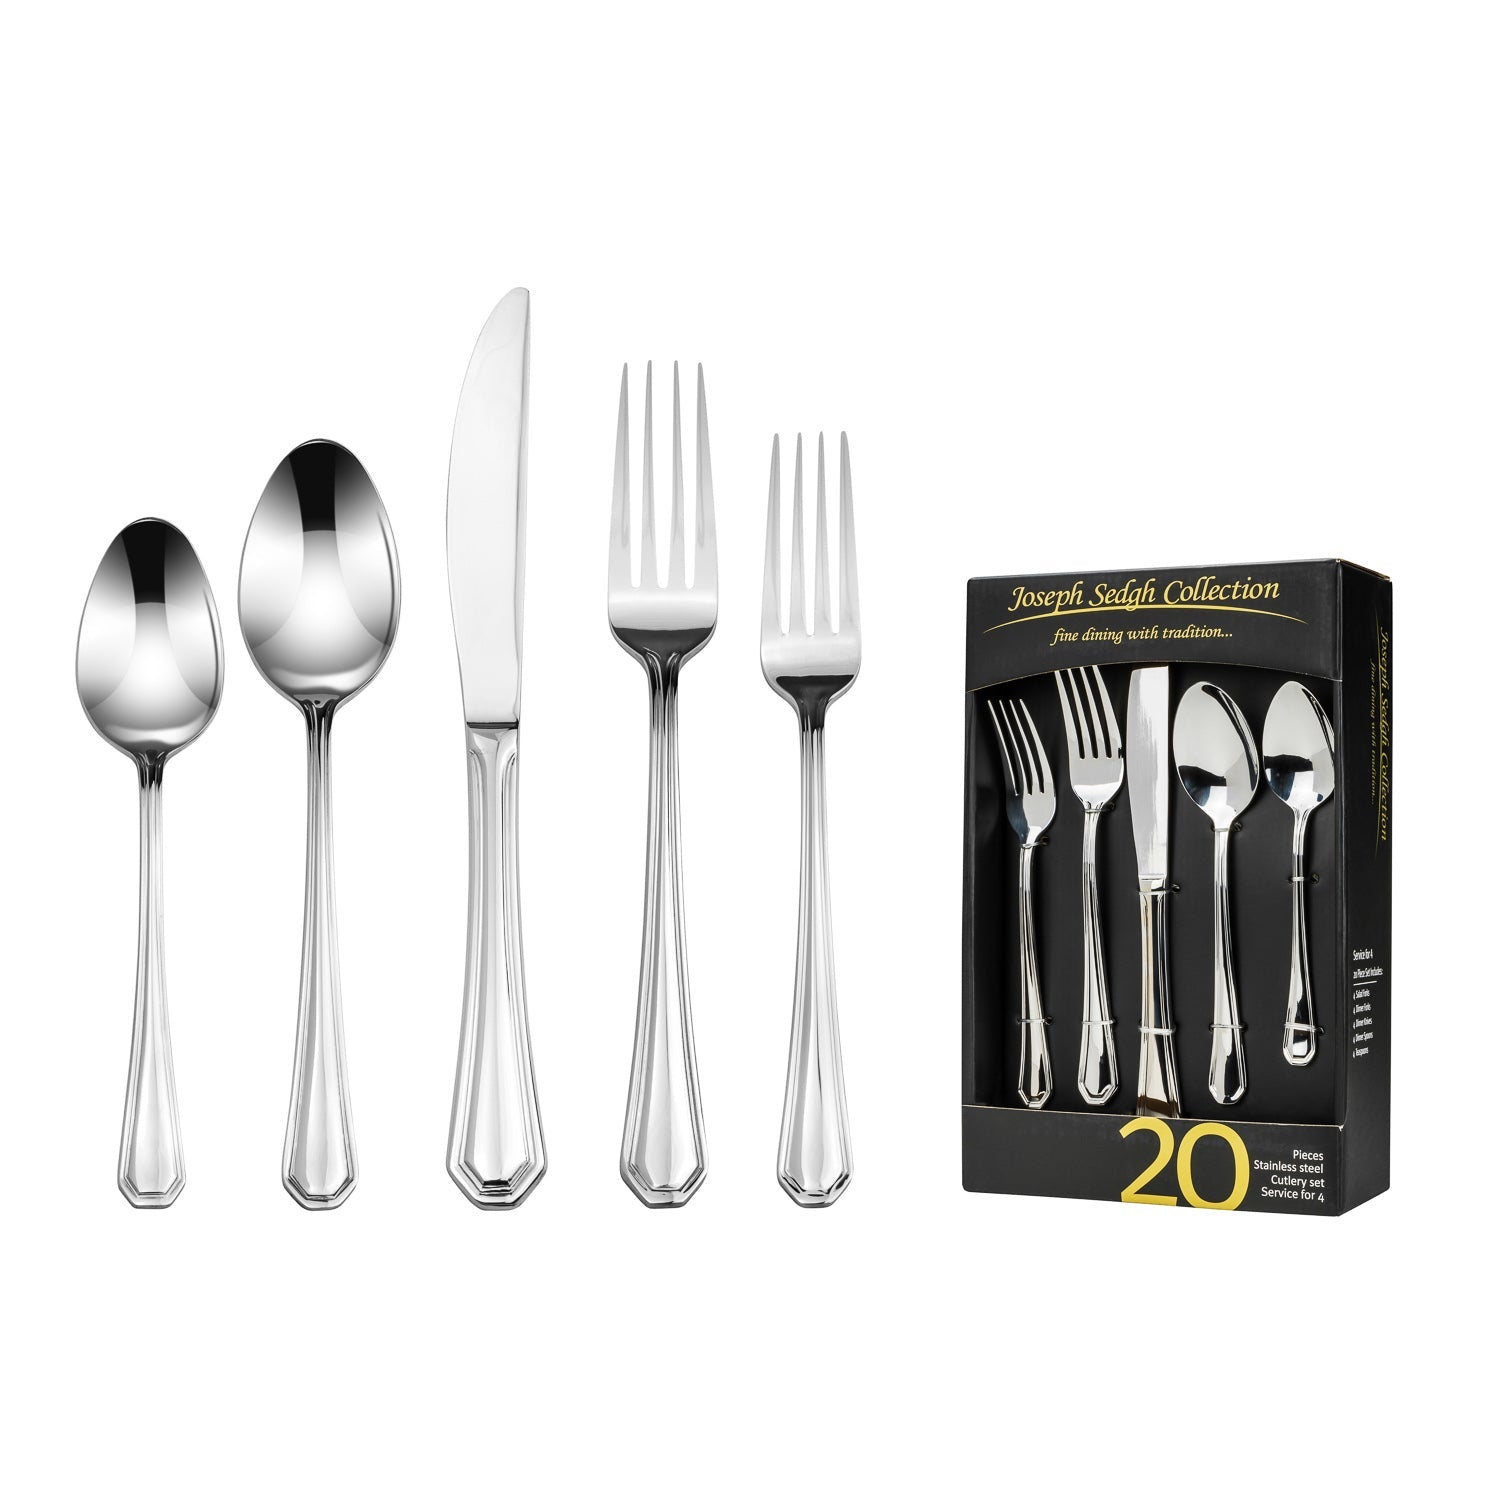 Joseph Sedgh Cambridge Stainless Steel Cutlery Set 20Pc. - Royal Gift